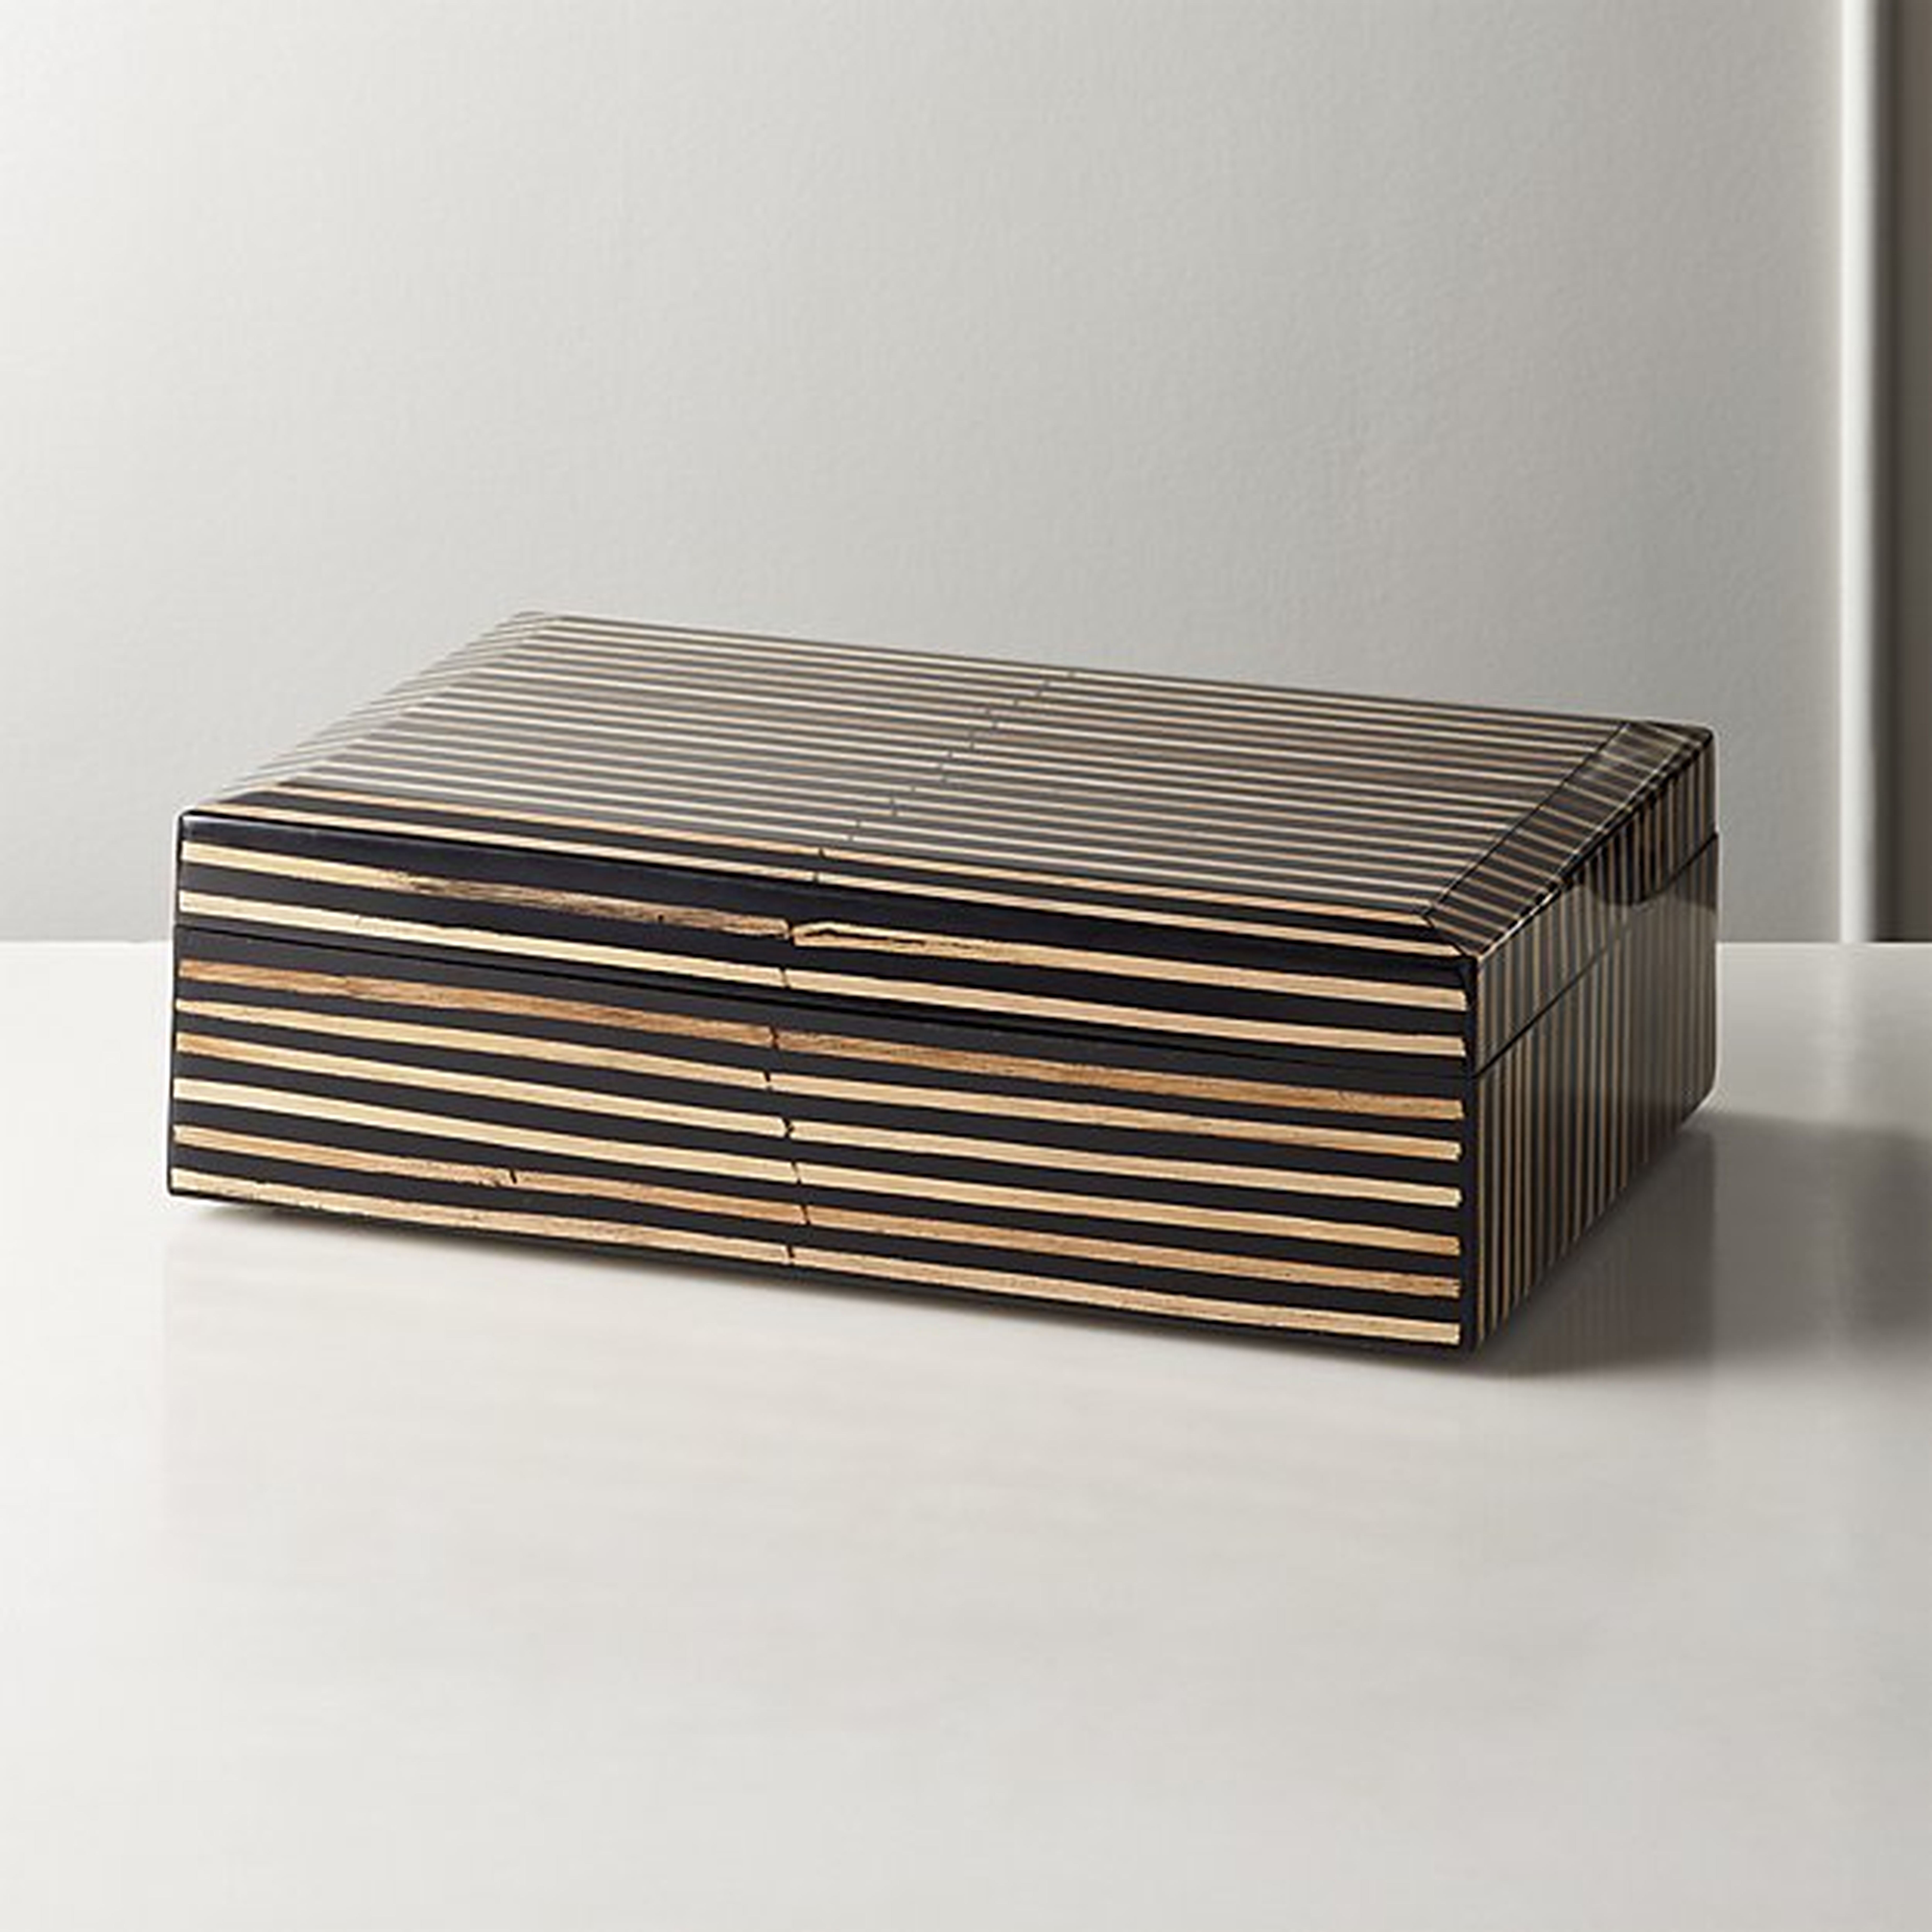 mar rattan striped box large - CB2